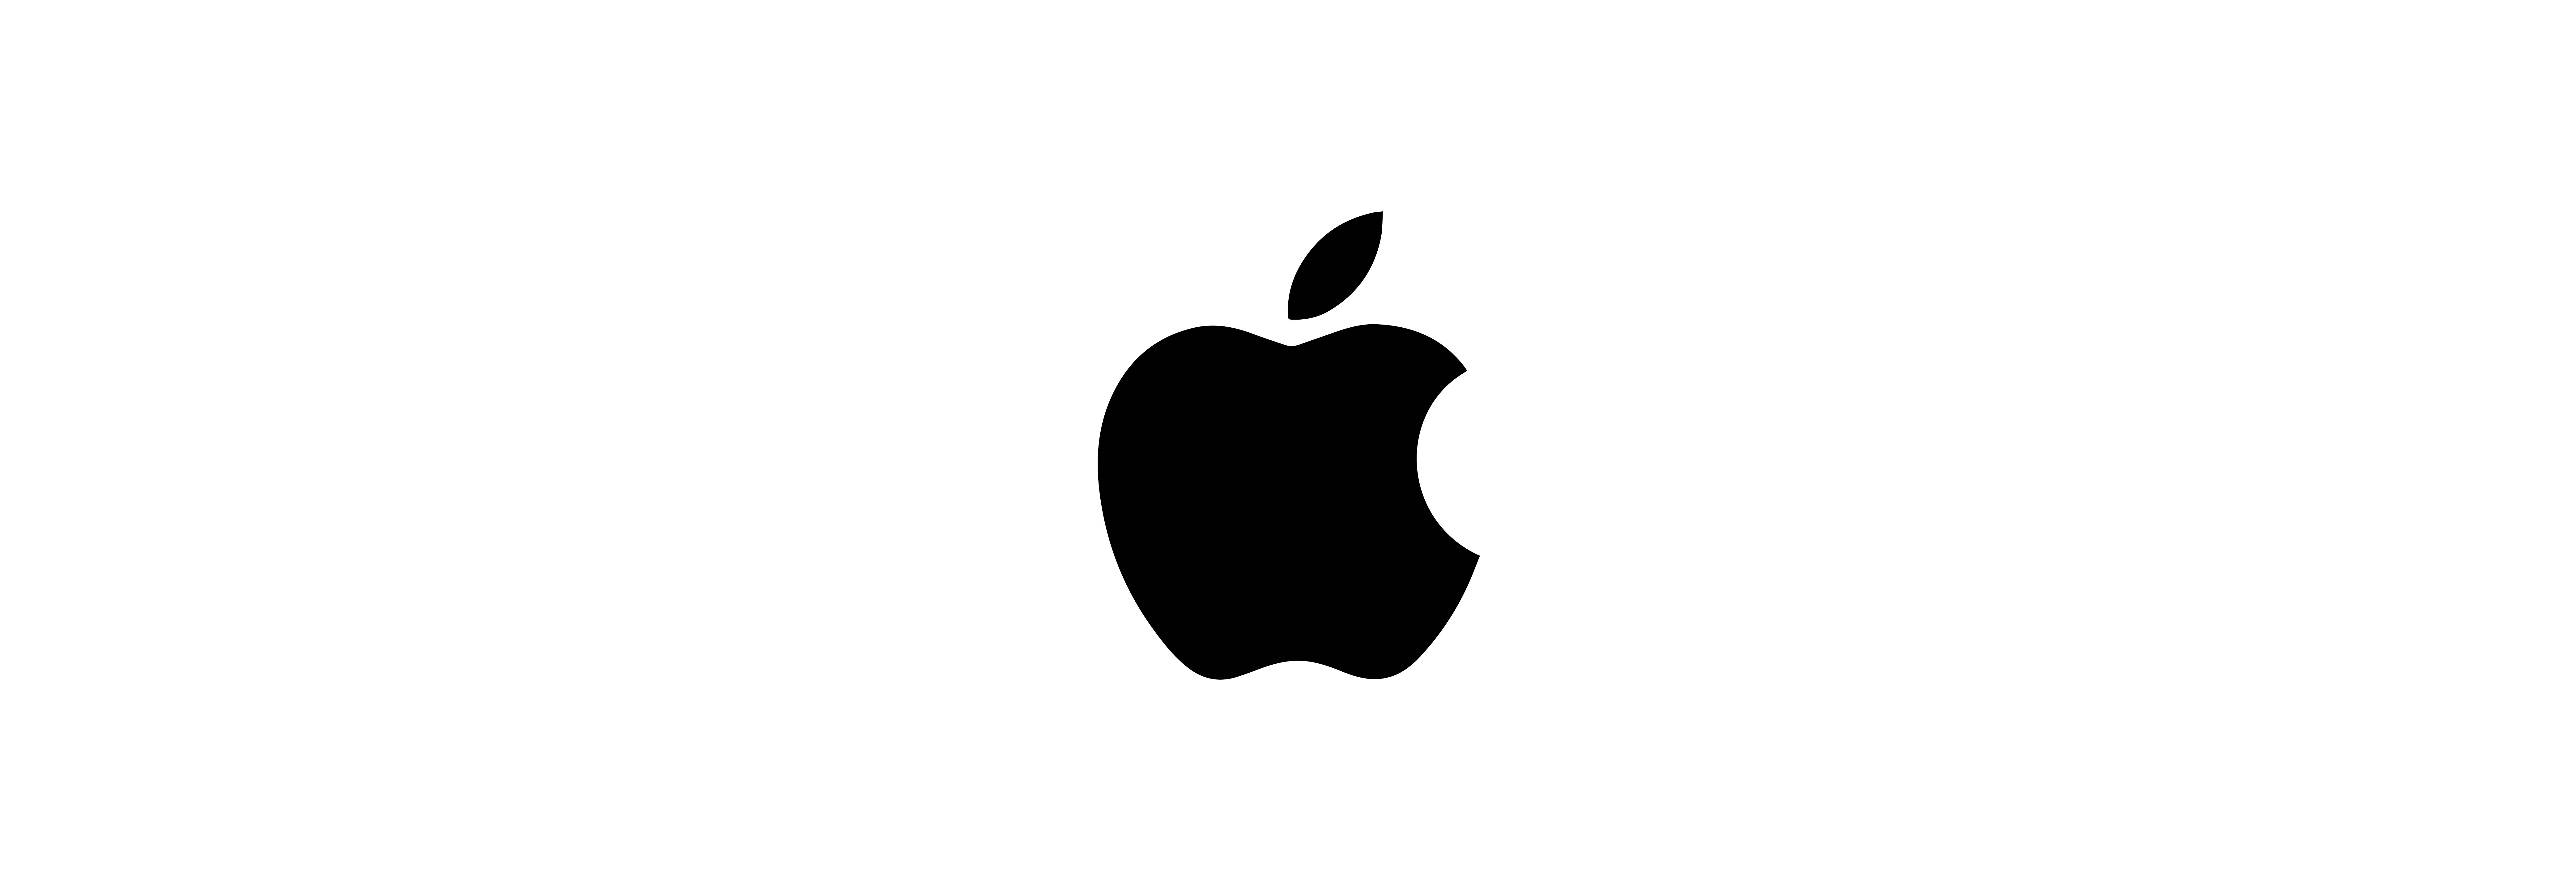 苹果（Apple）